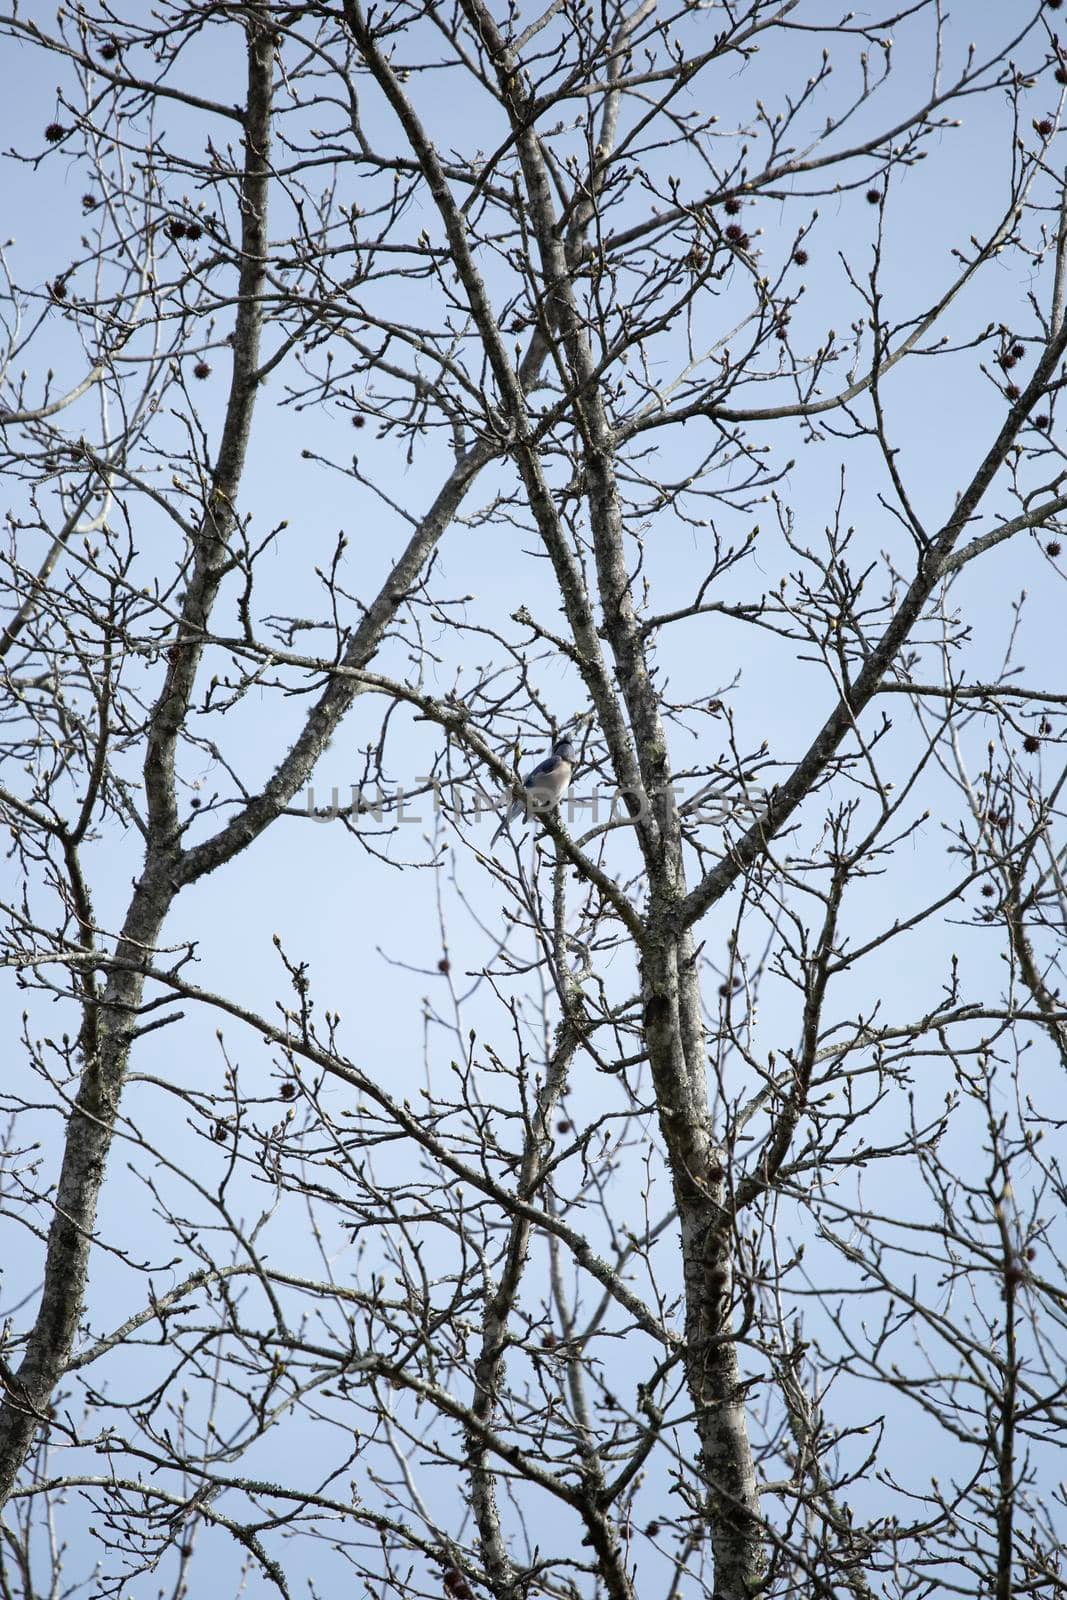 Blue Jay on a Branch by tornado98